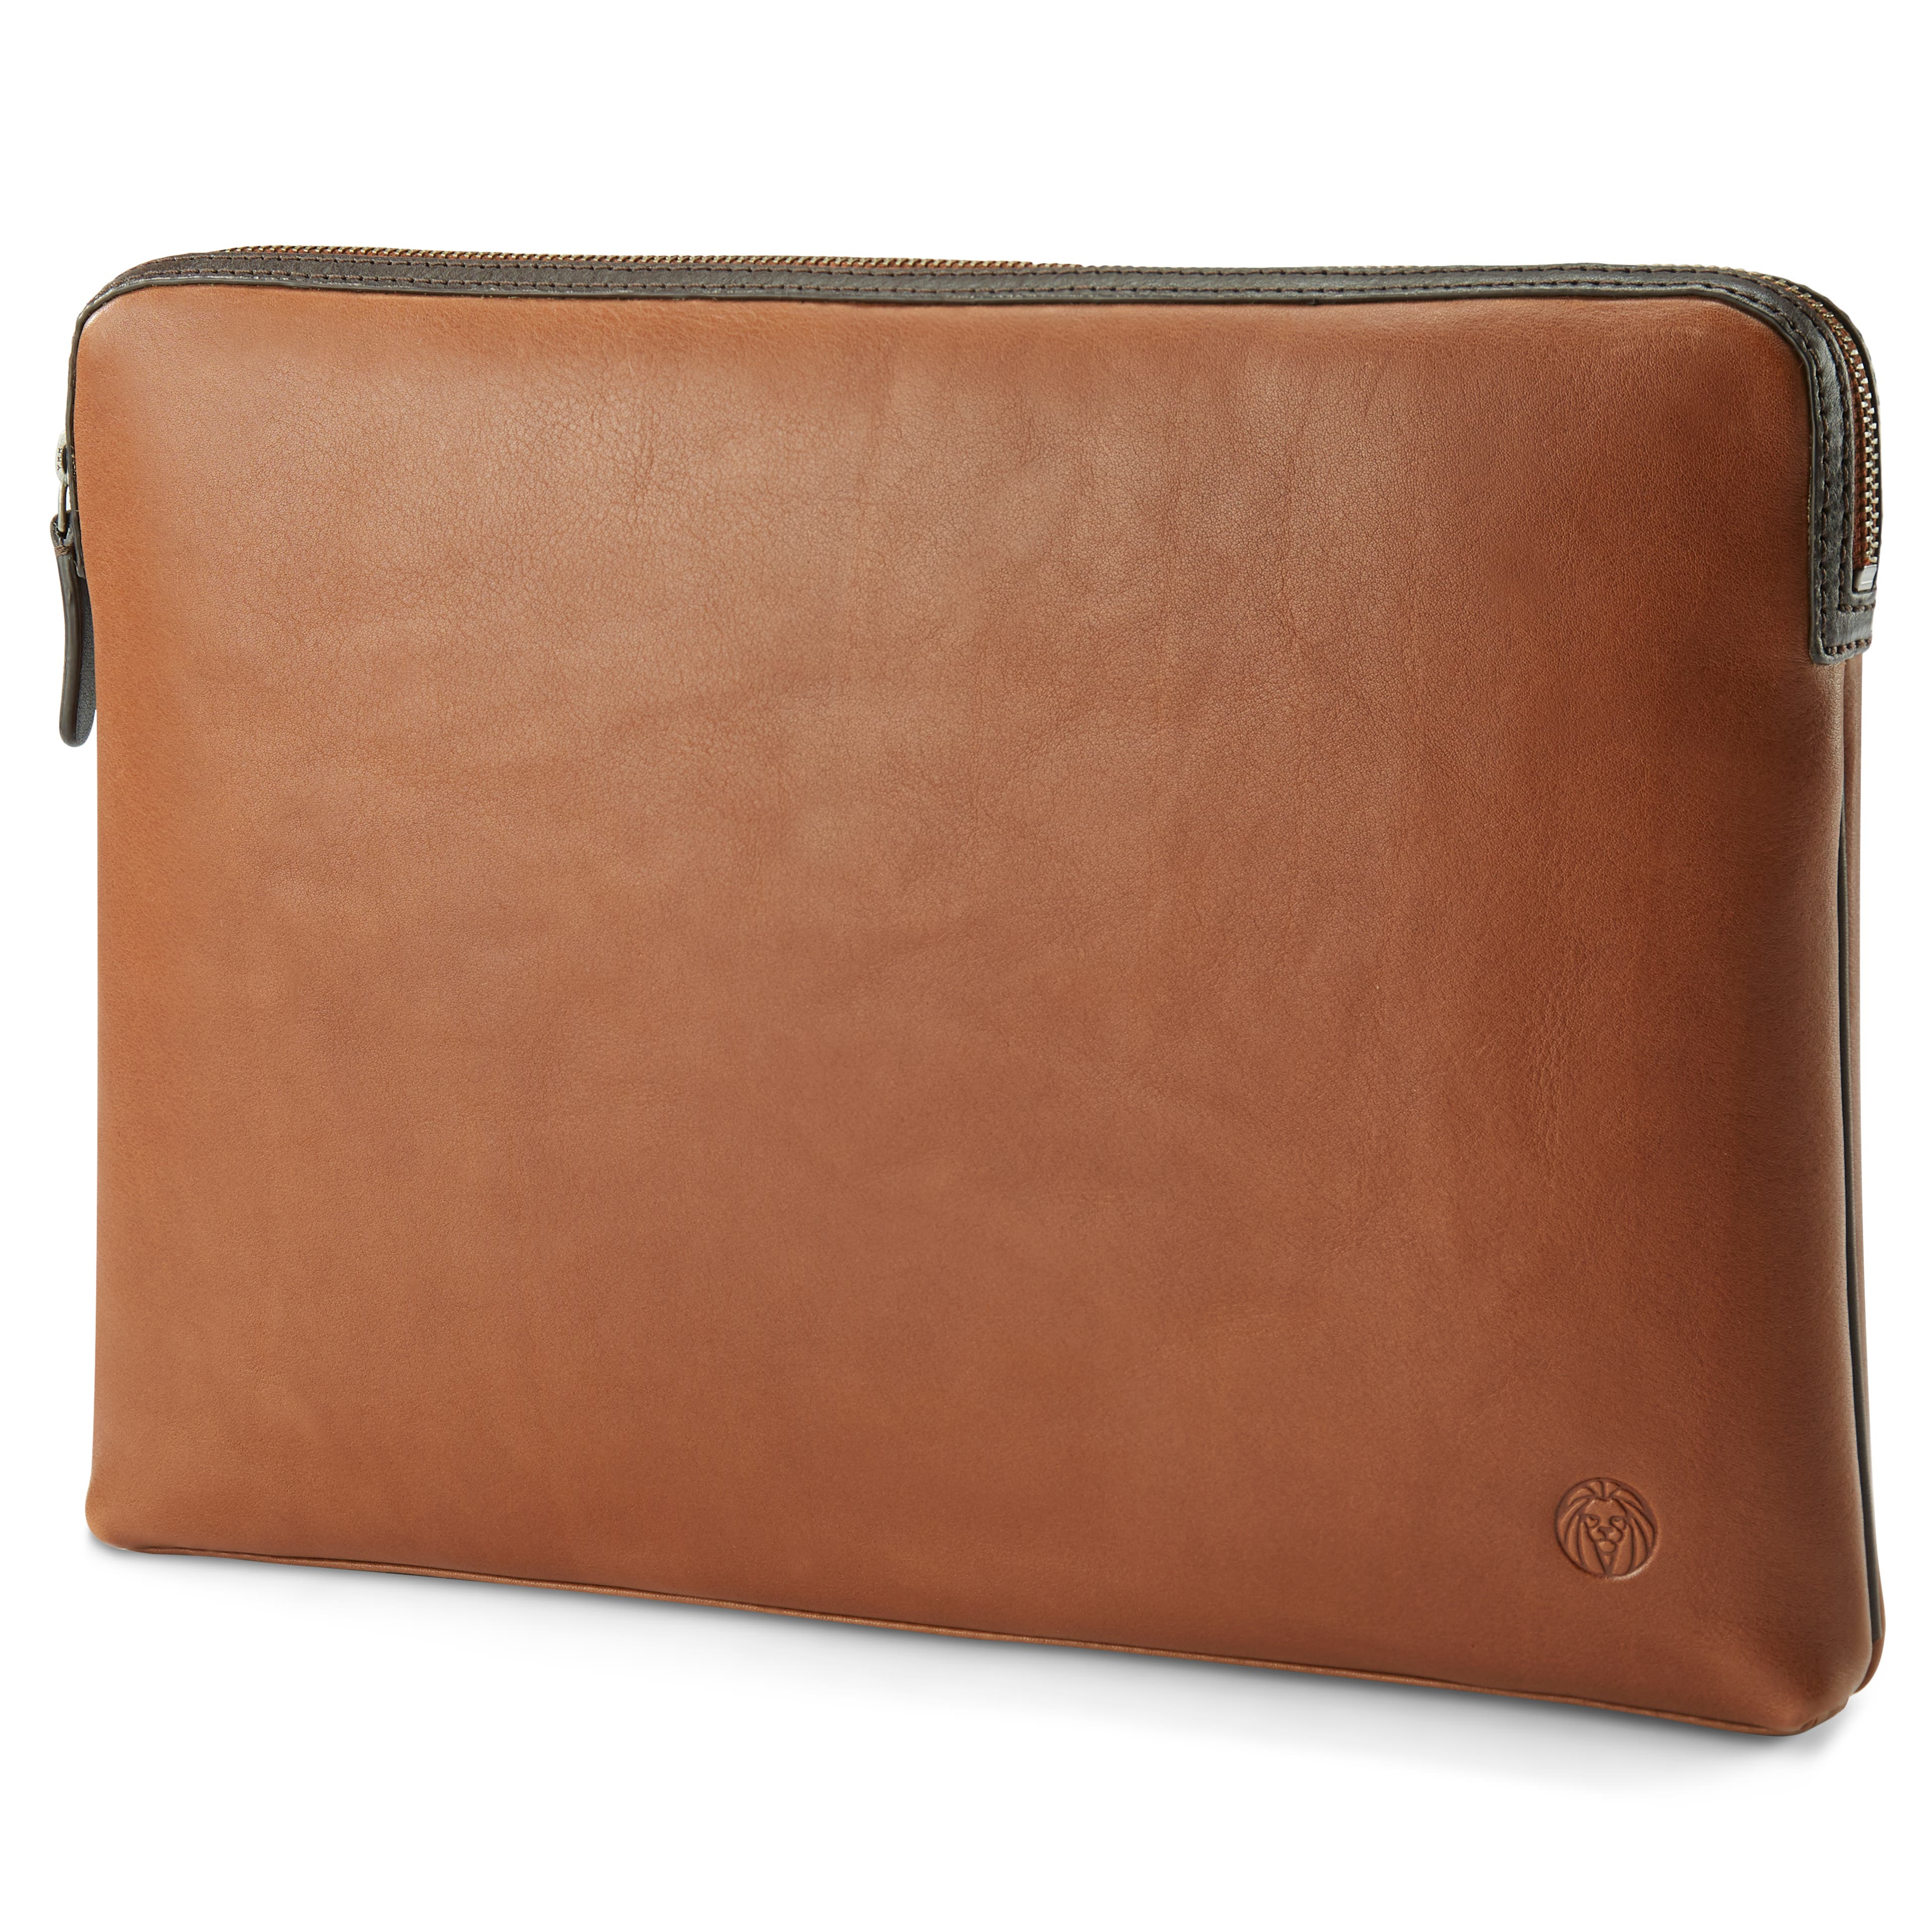 Lou Tan & Dark-Brown Leather Laptop Sleeve